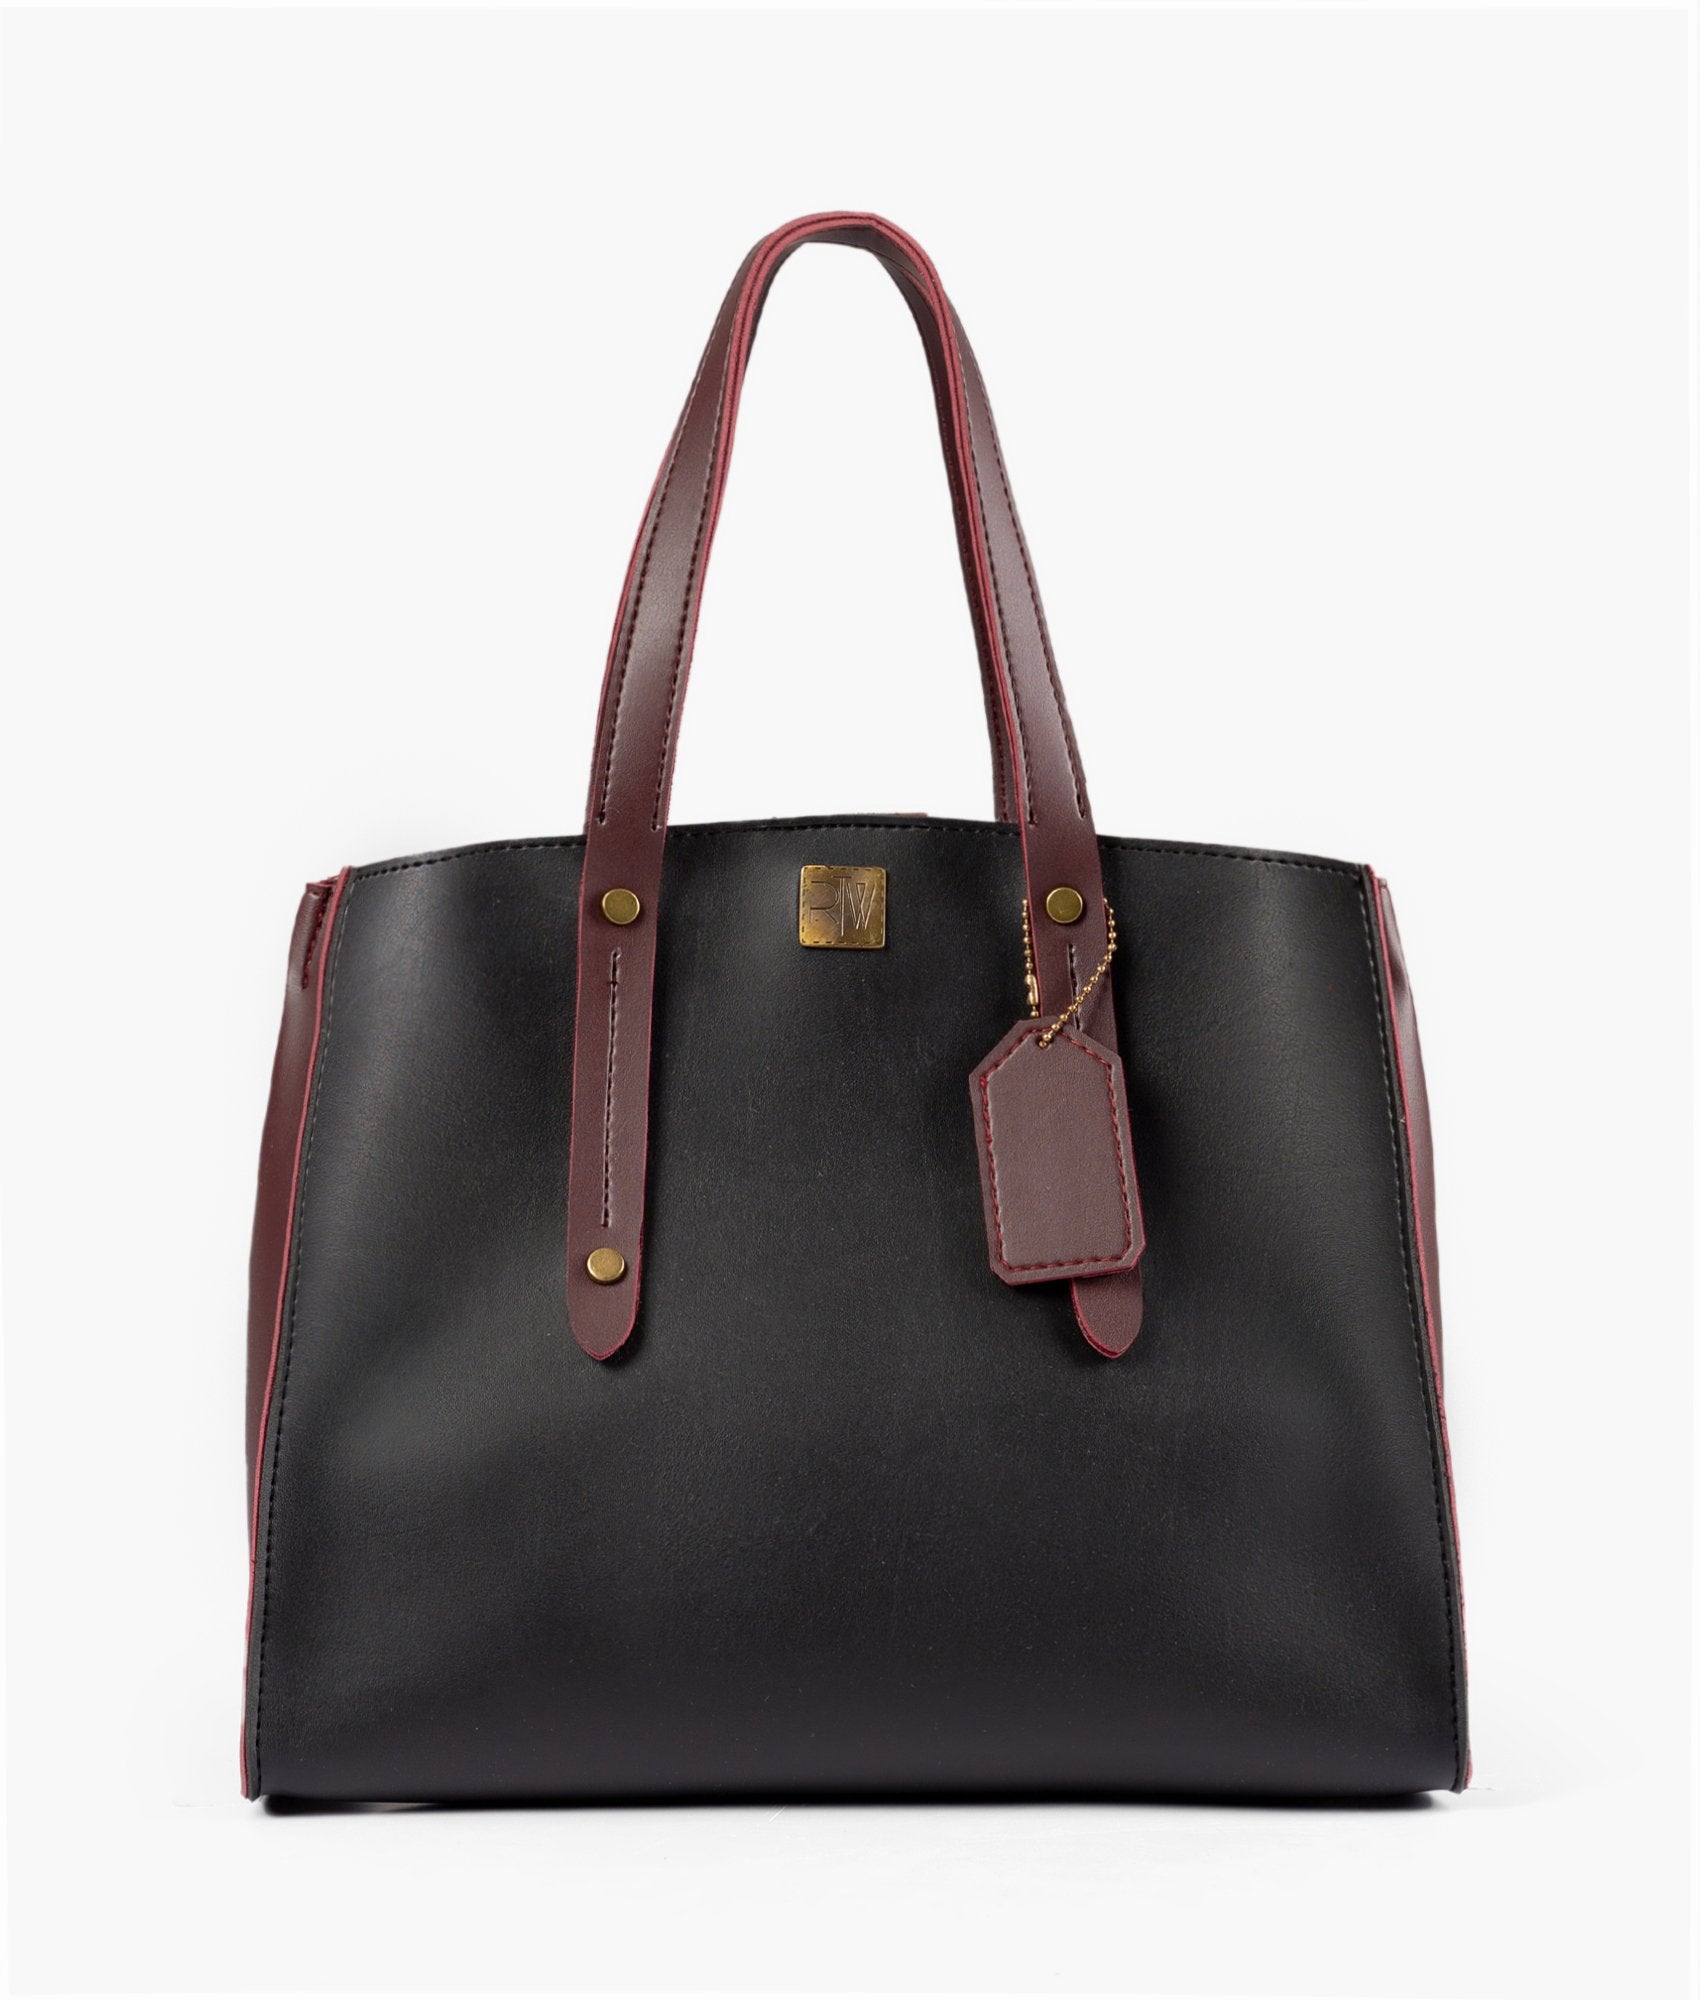 Black with burgundy multi compartment satchel bag